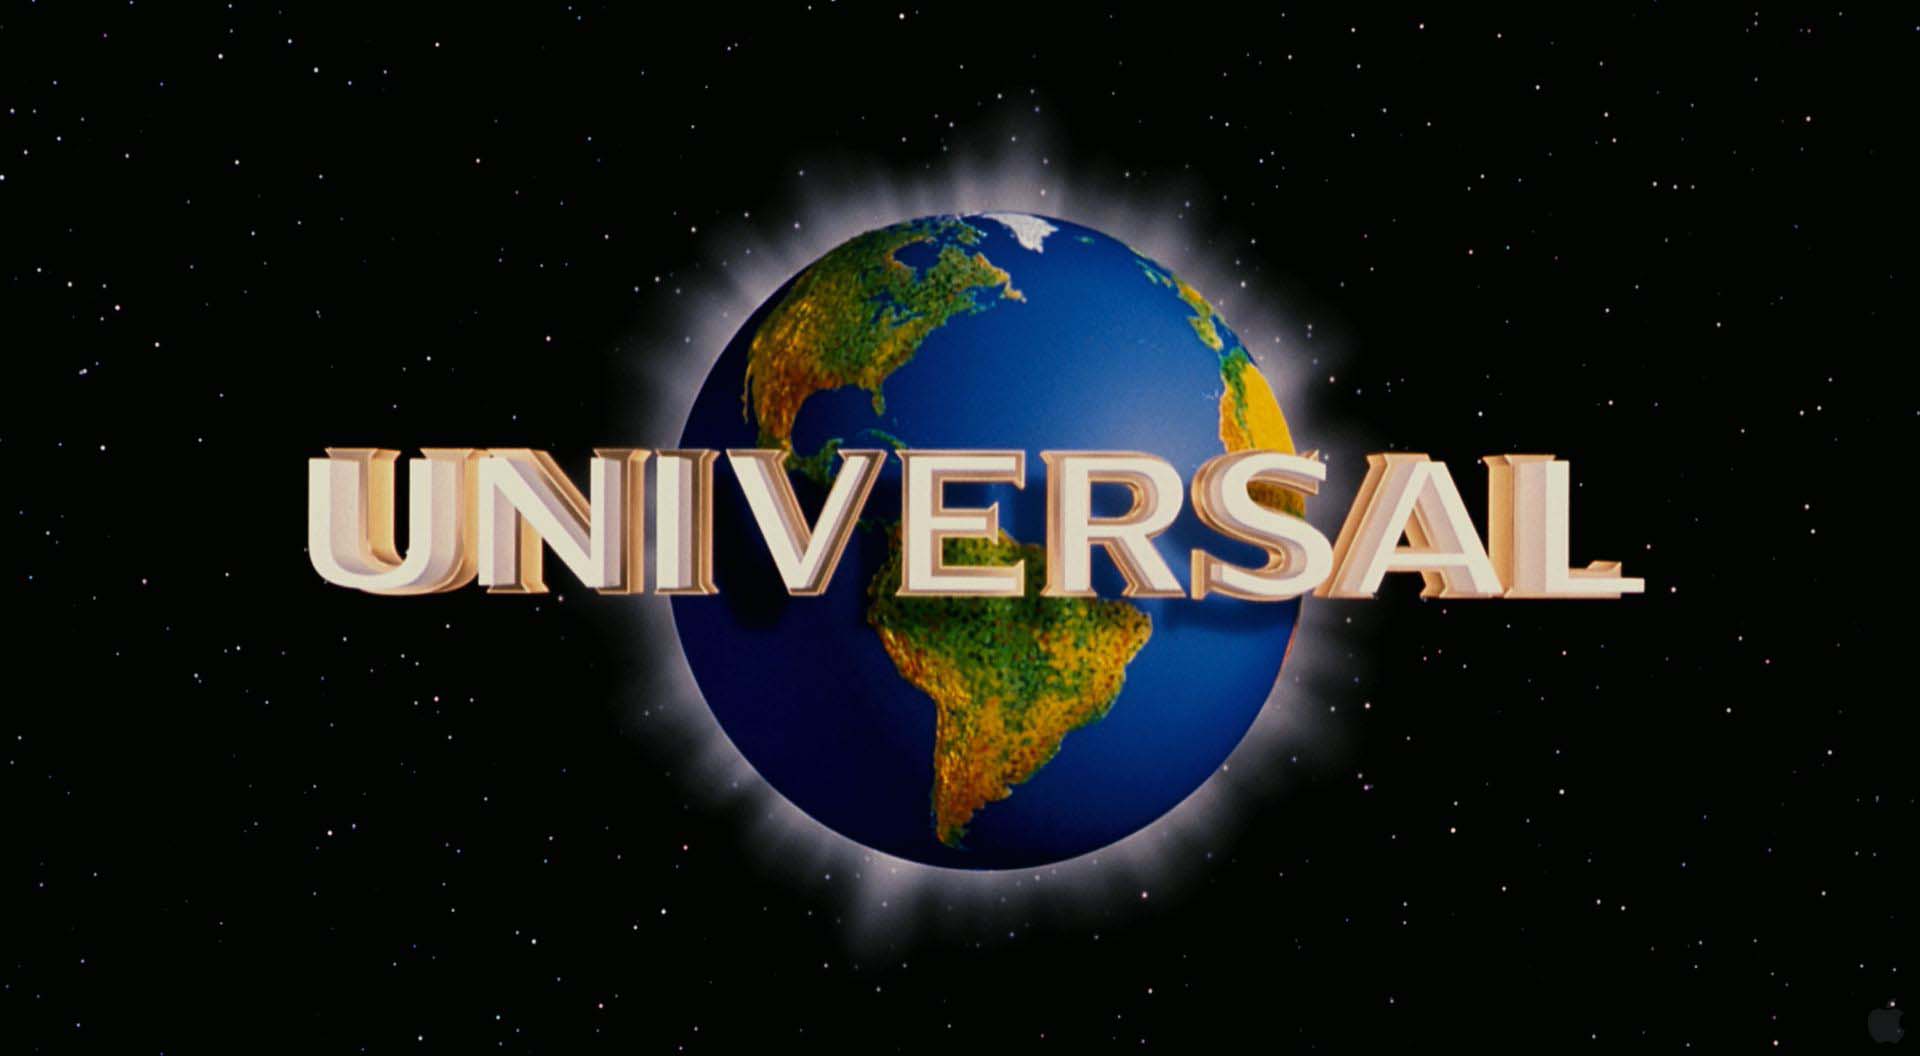 universal studios logo